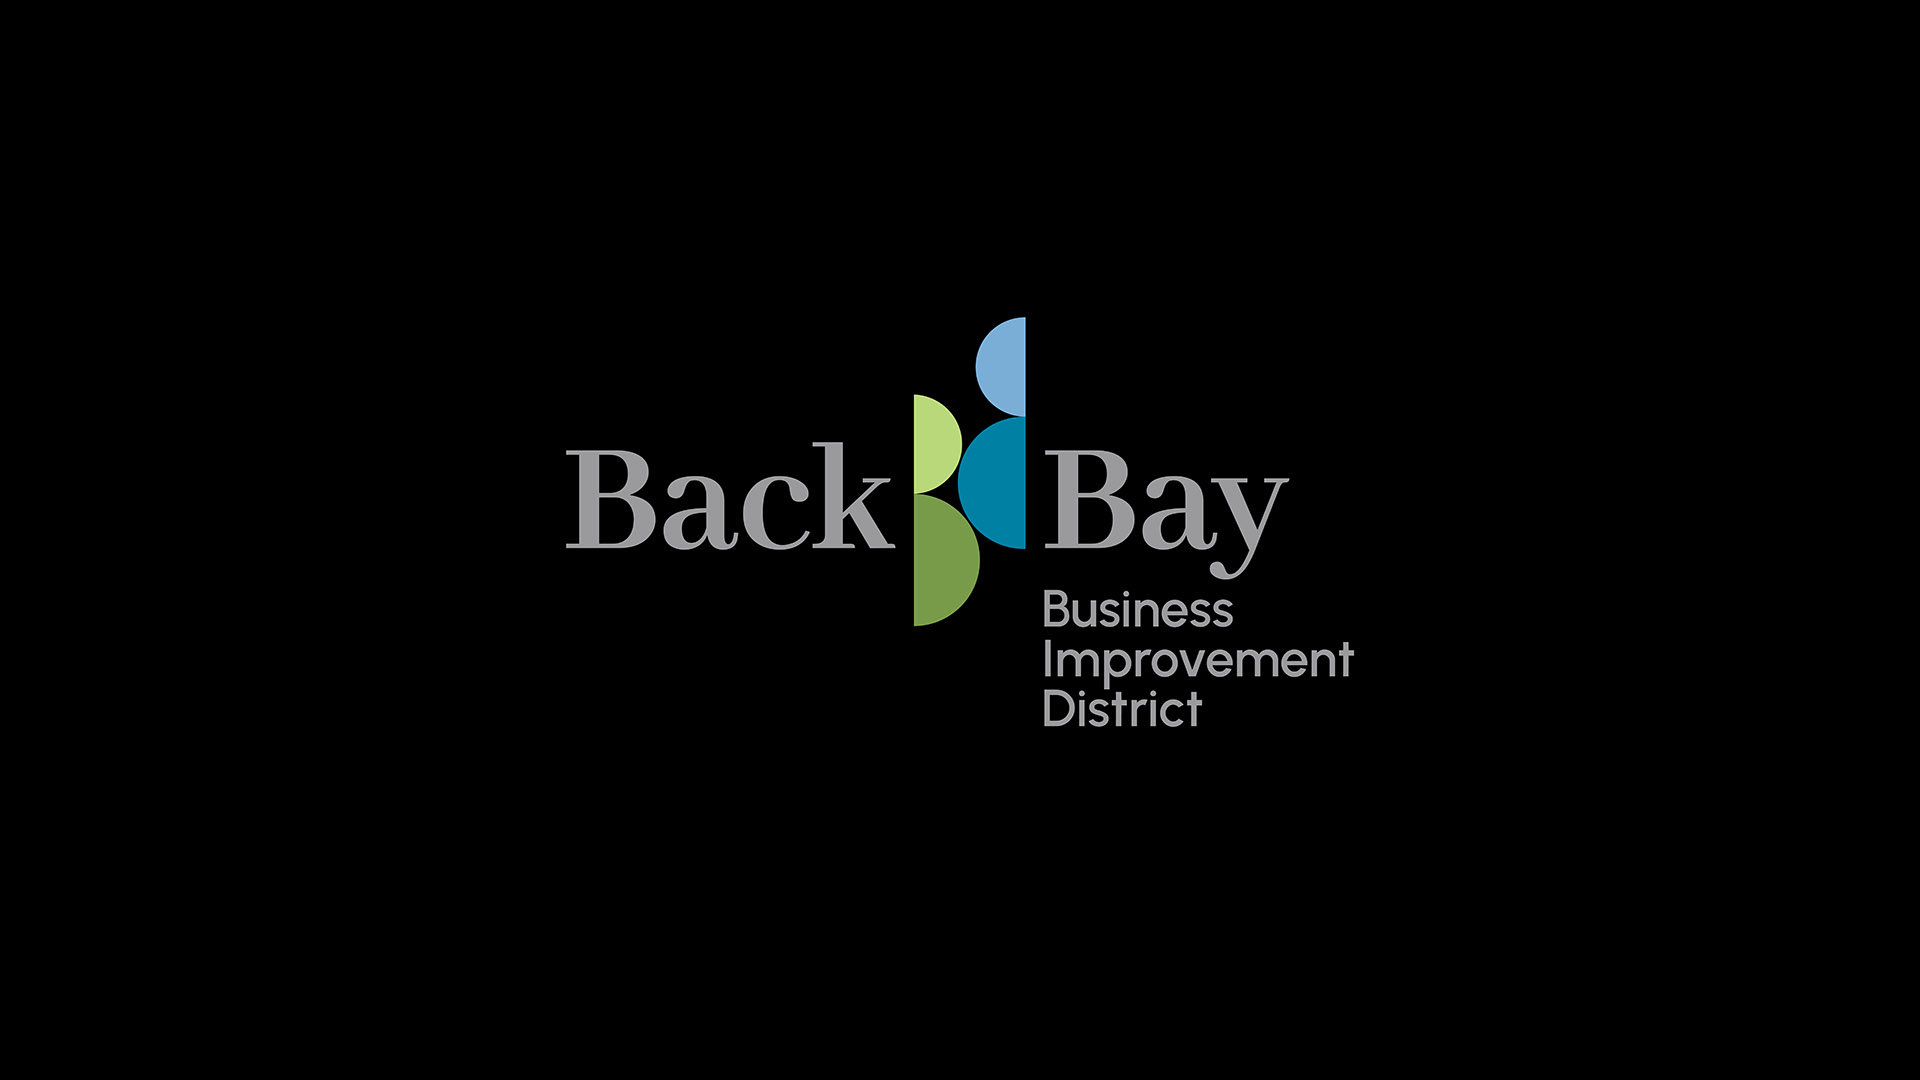 back bay business improvement district logo on black